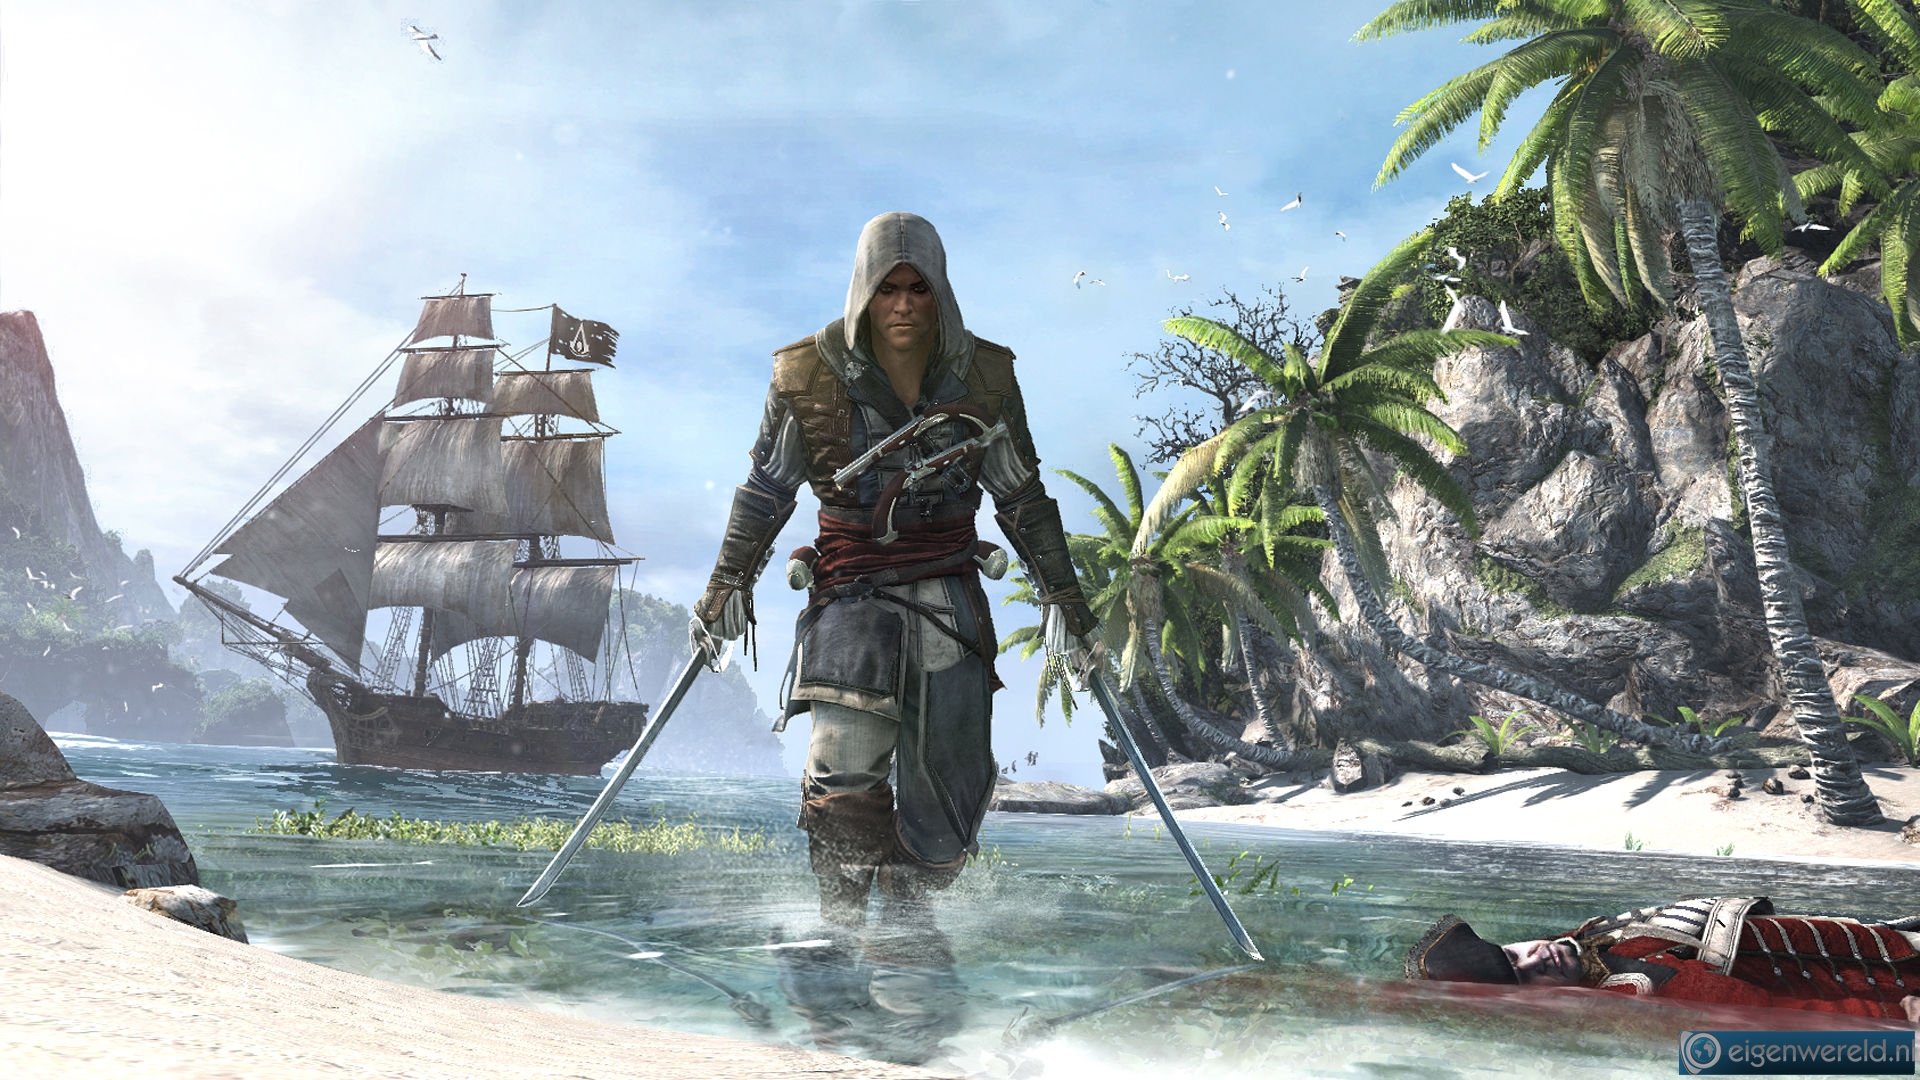 Screenshot van Assassin's Creed IV: Black Flag